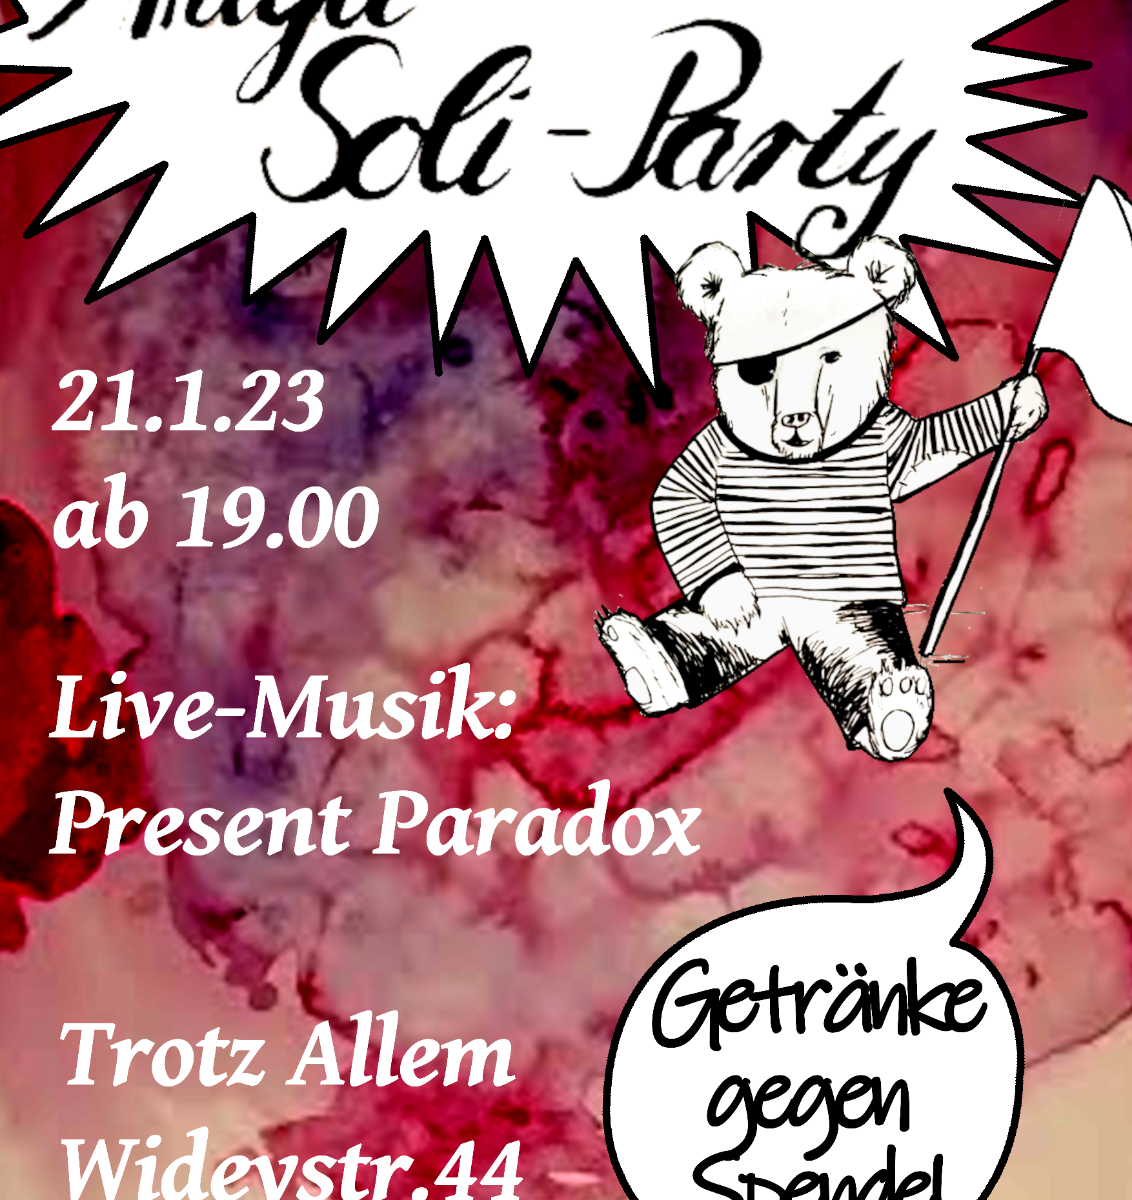 Antifa-Soli-Party am 21. Januar 2023 ab 19:00 Uhr; Live-Musik: Present Paradoc; Trotz Allem, Wideystraße 44; Getränke gegen Spende